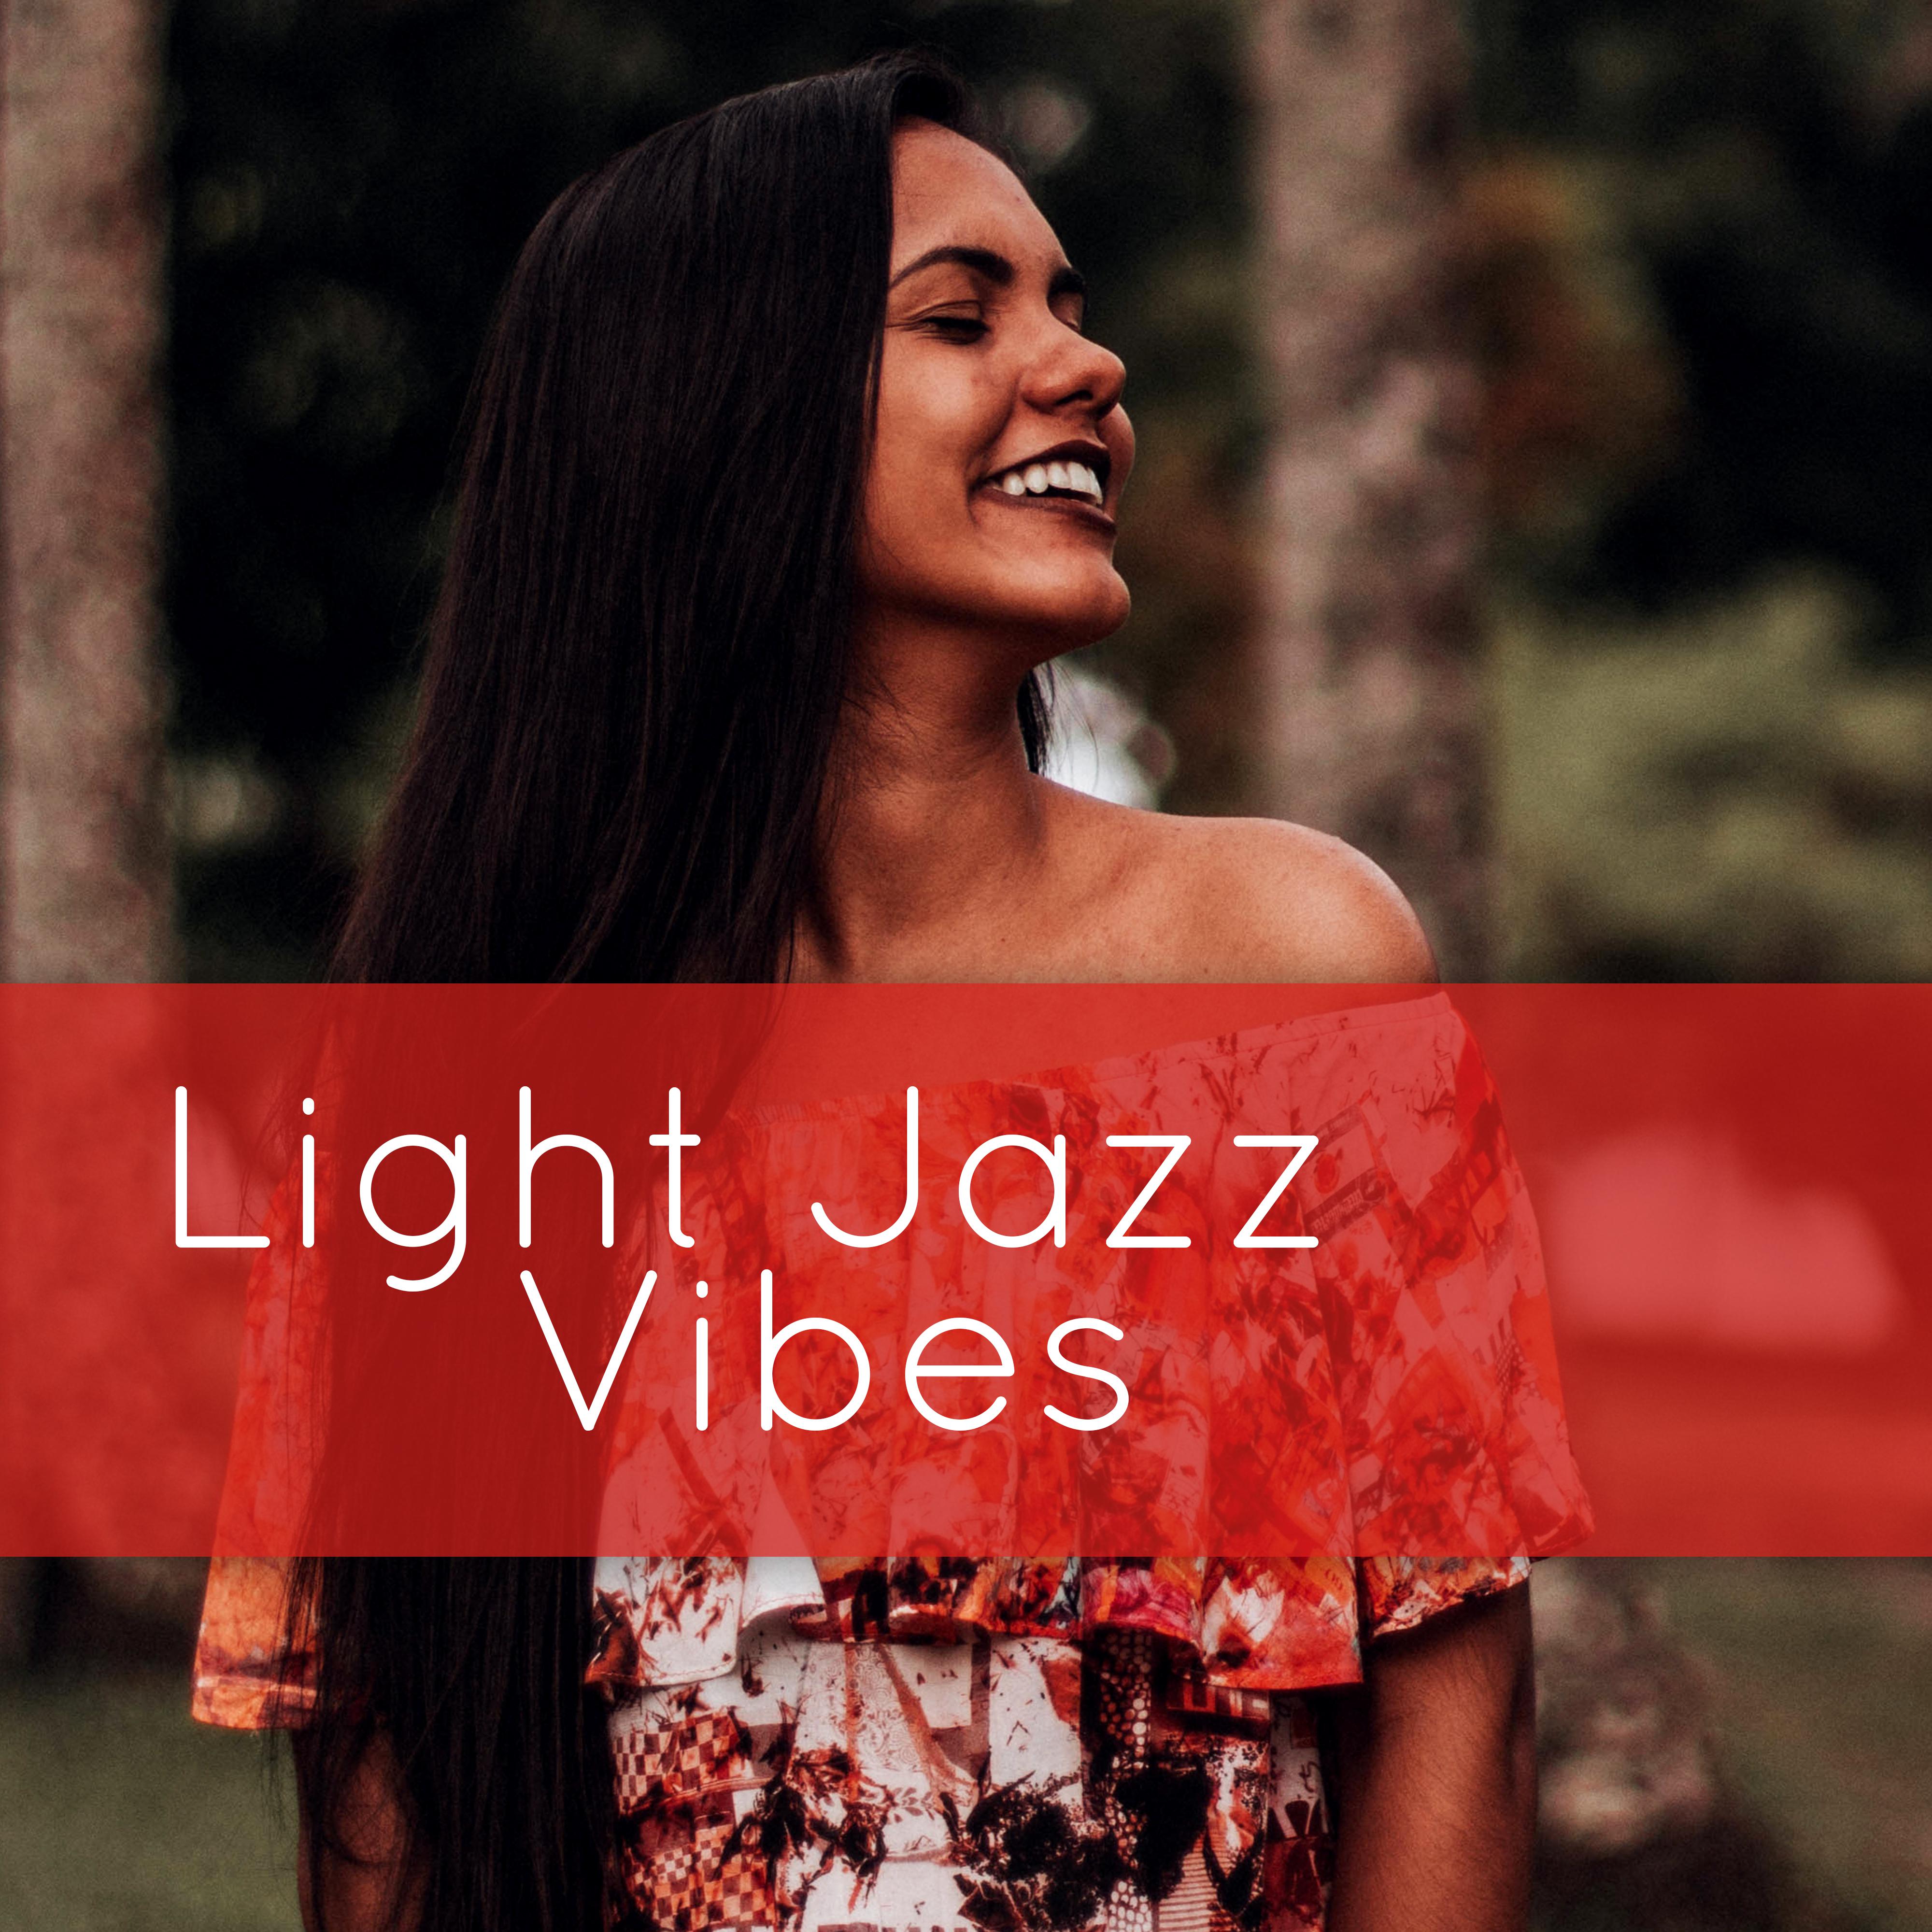 Light Jazz Vibes